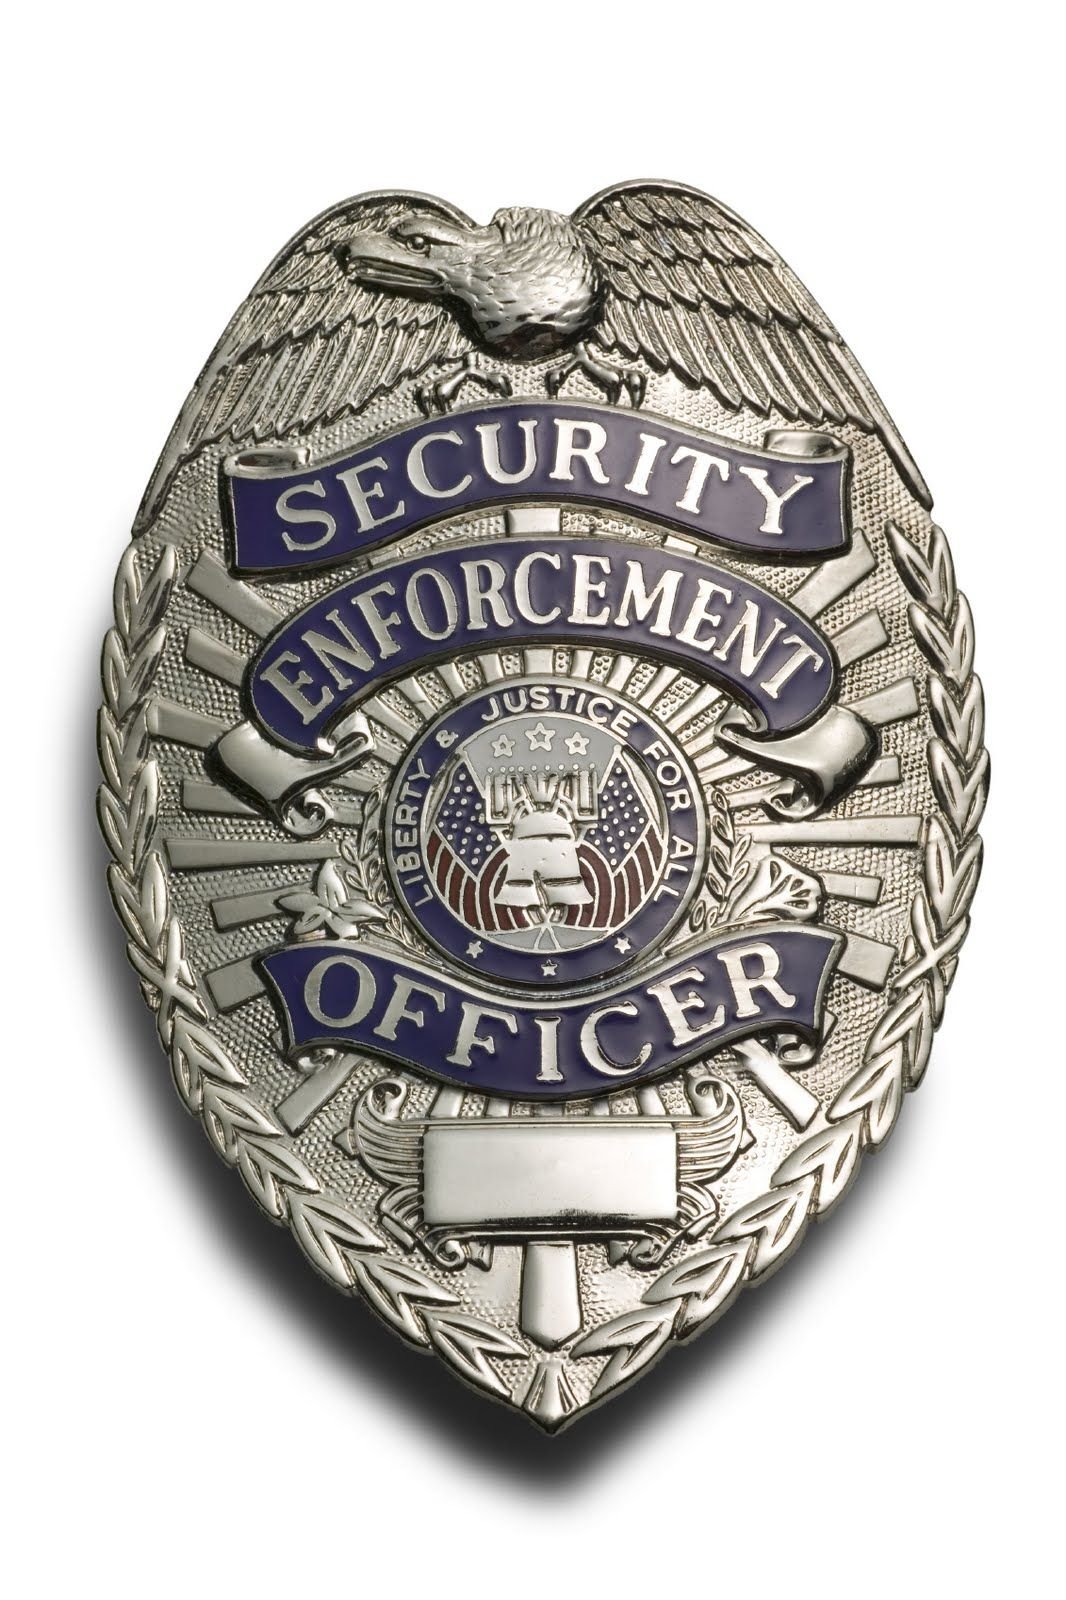 Police Badge Wallpaper